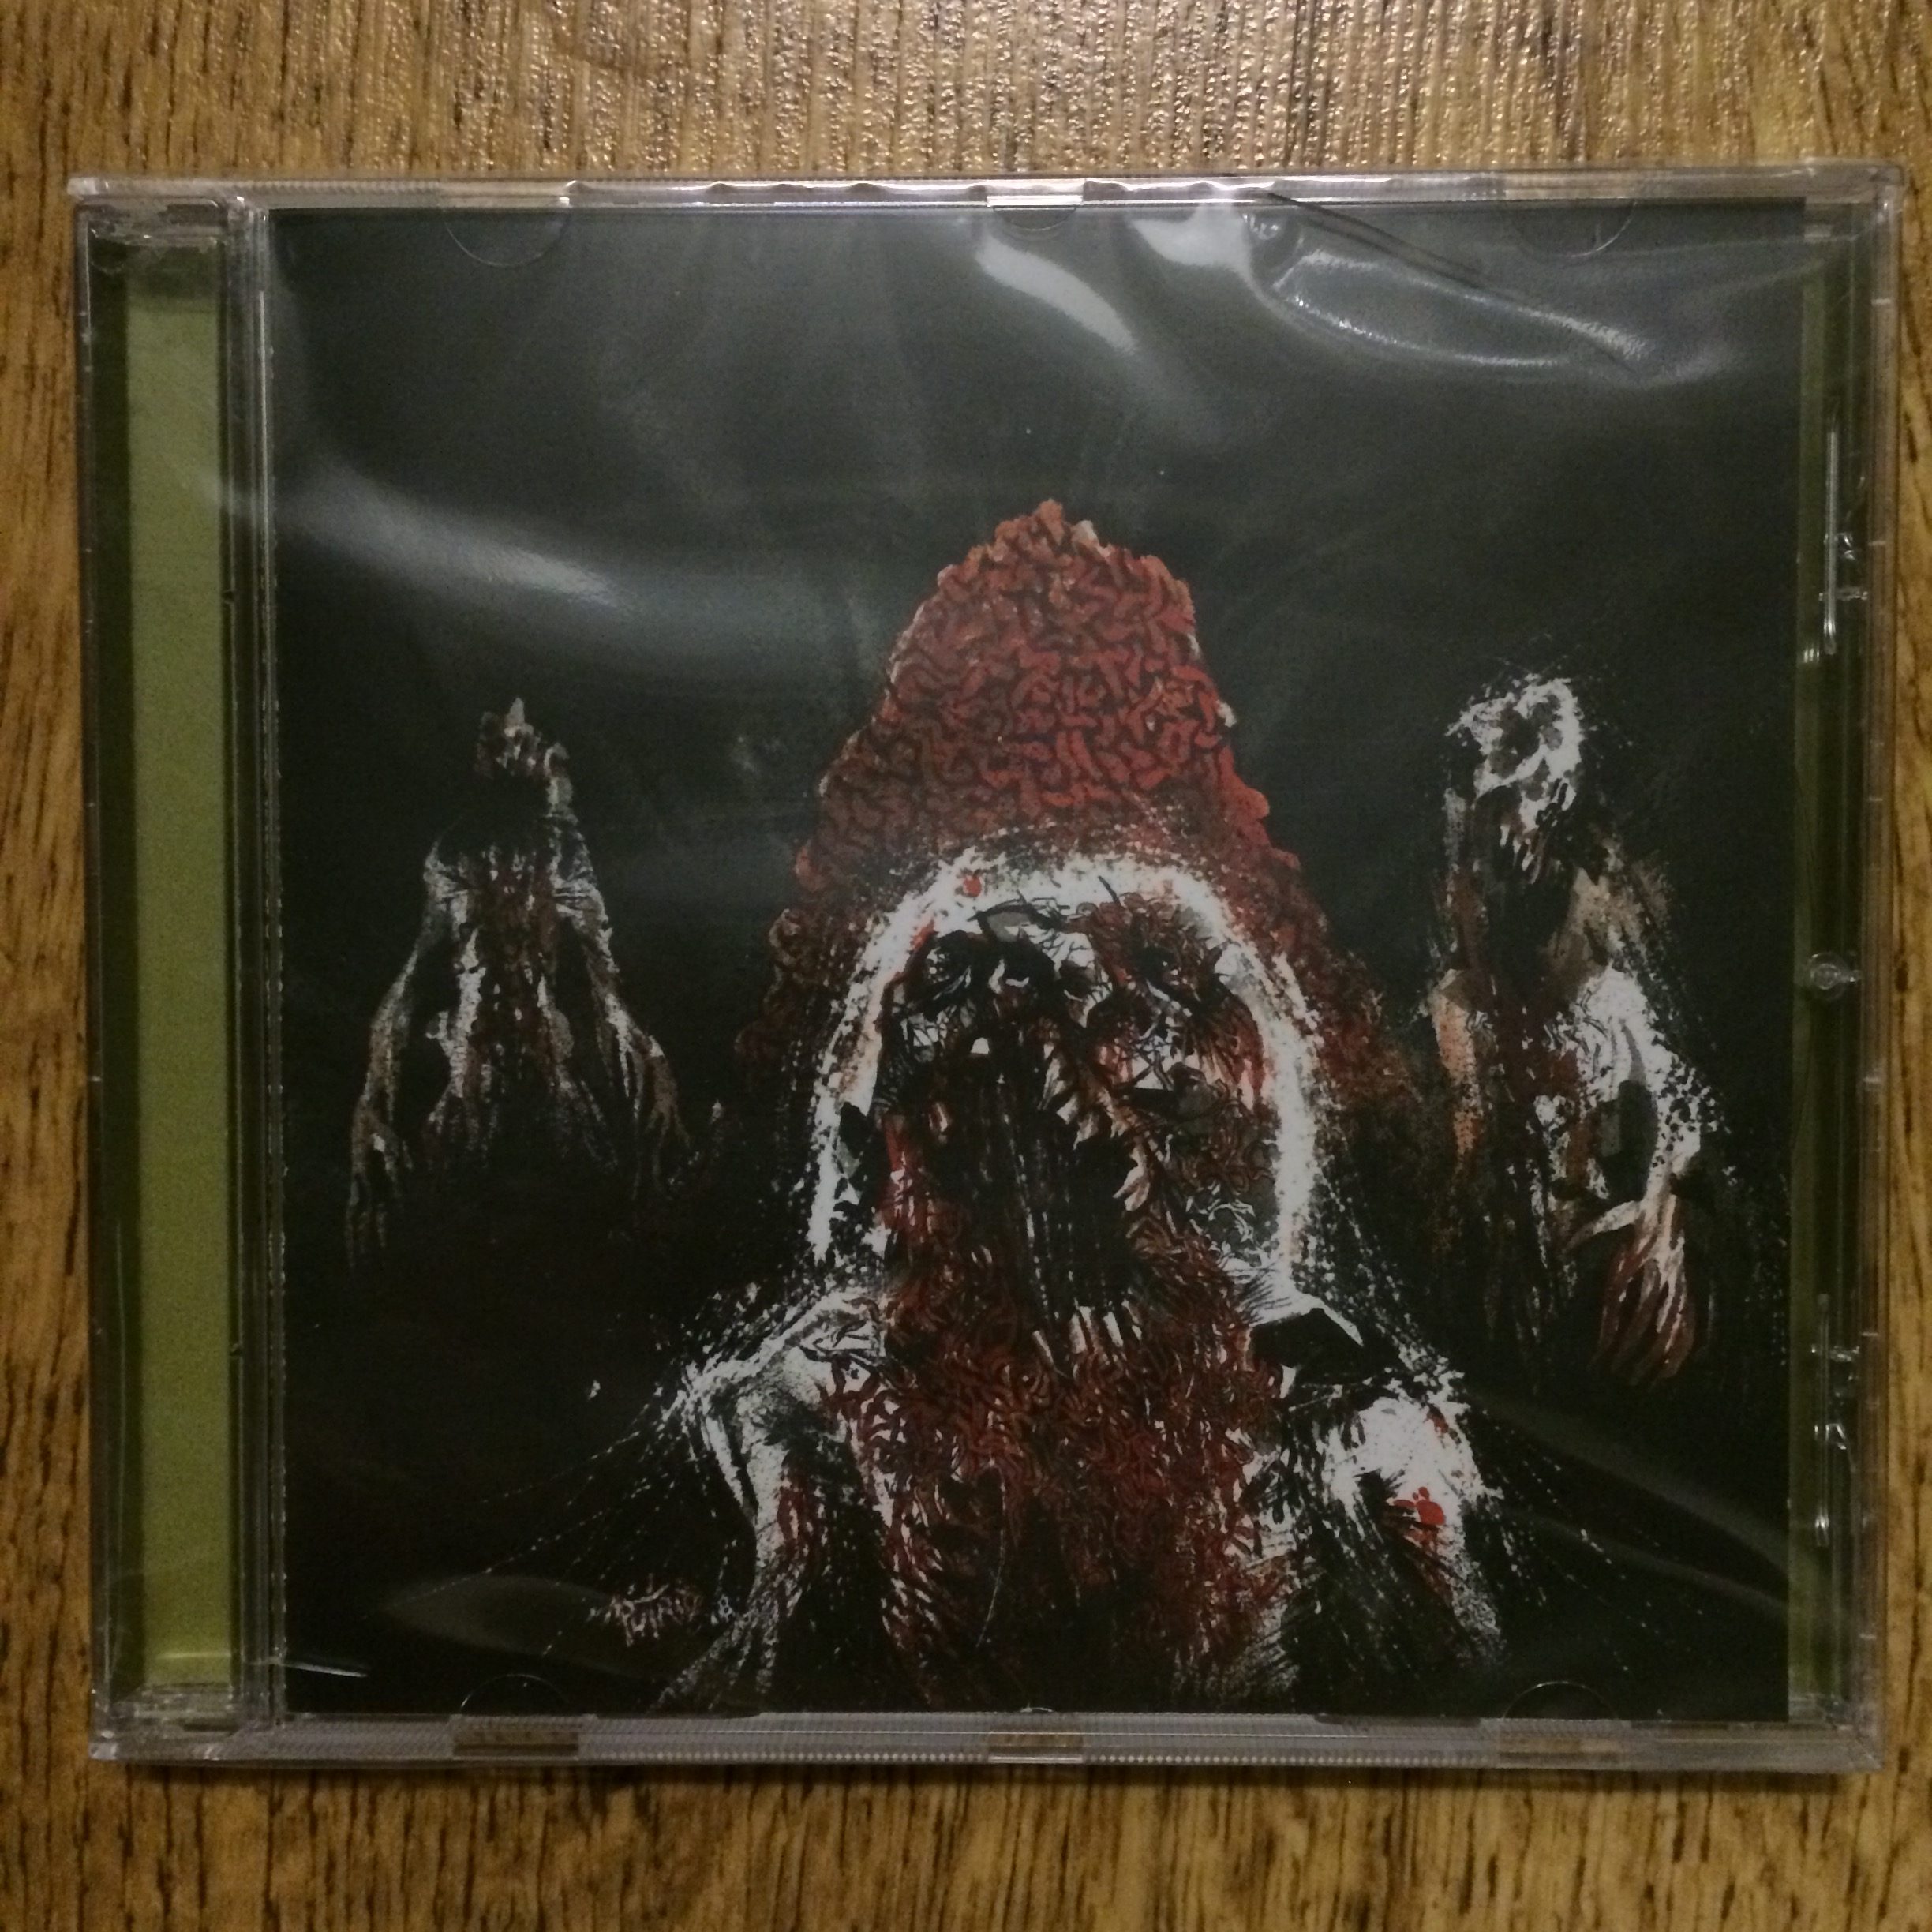 Photo of the Nekrofilth - "Worm Ritual" CD